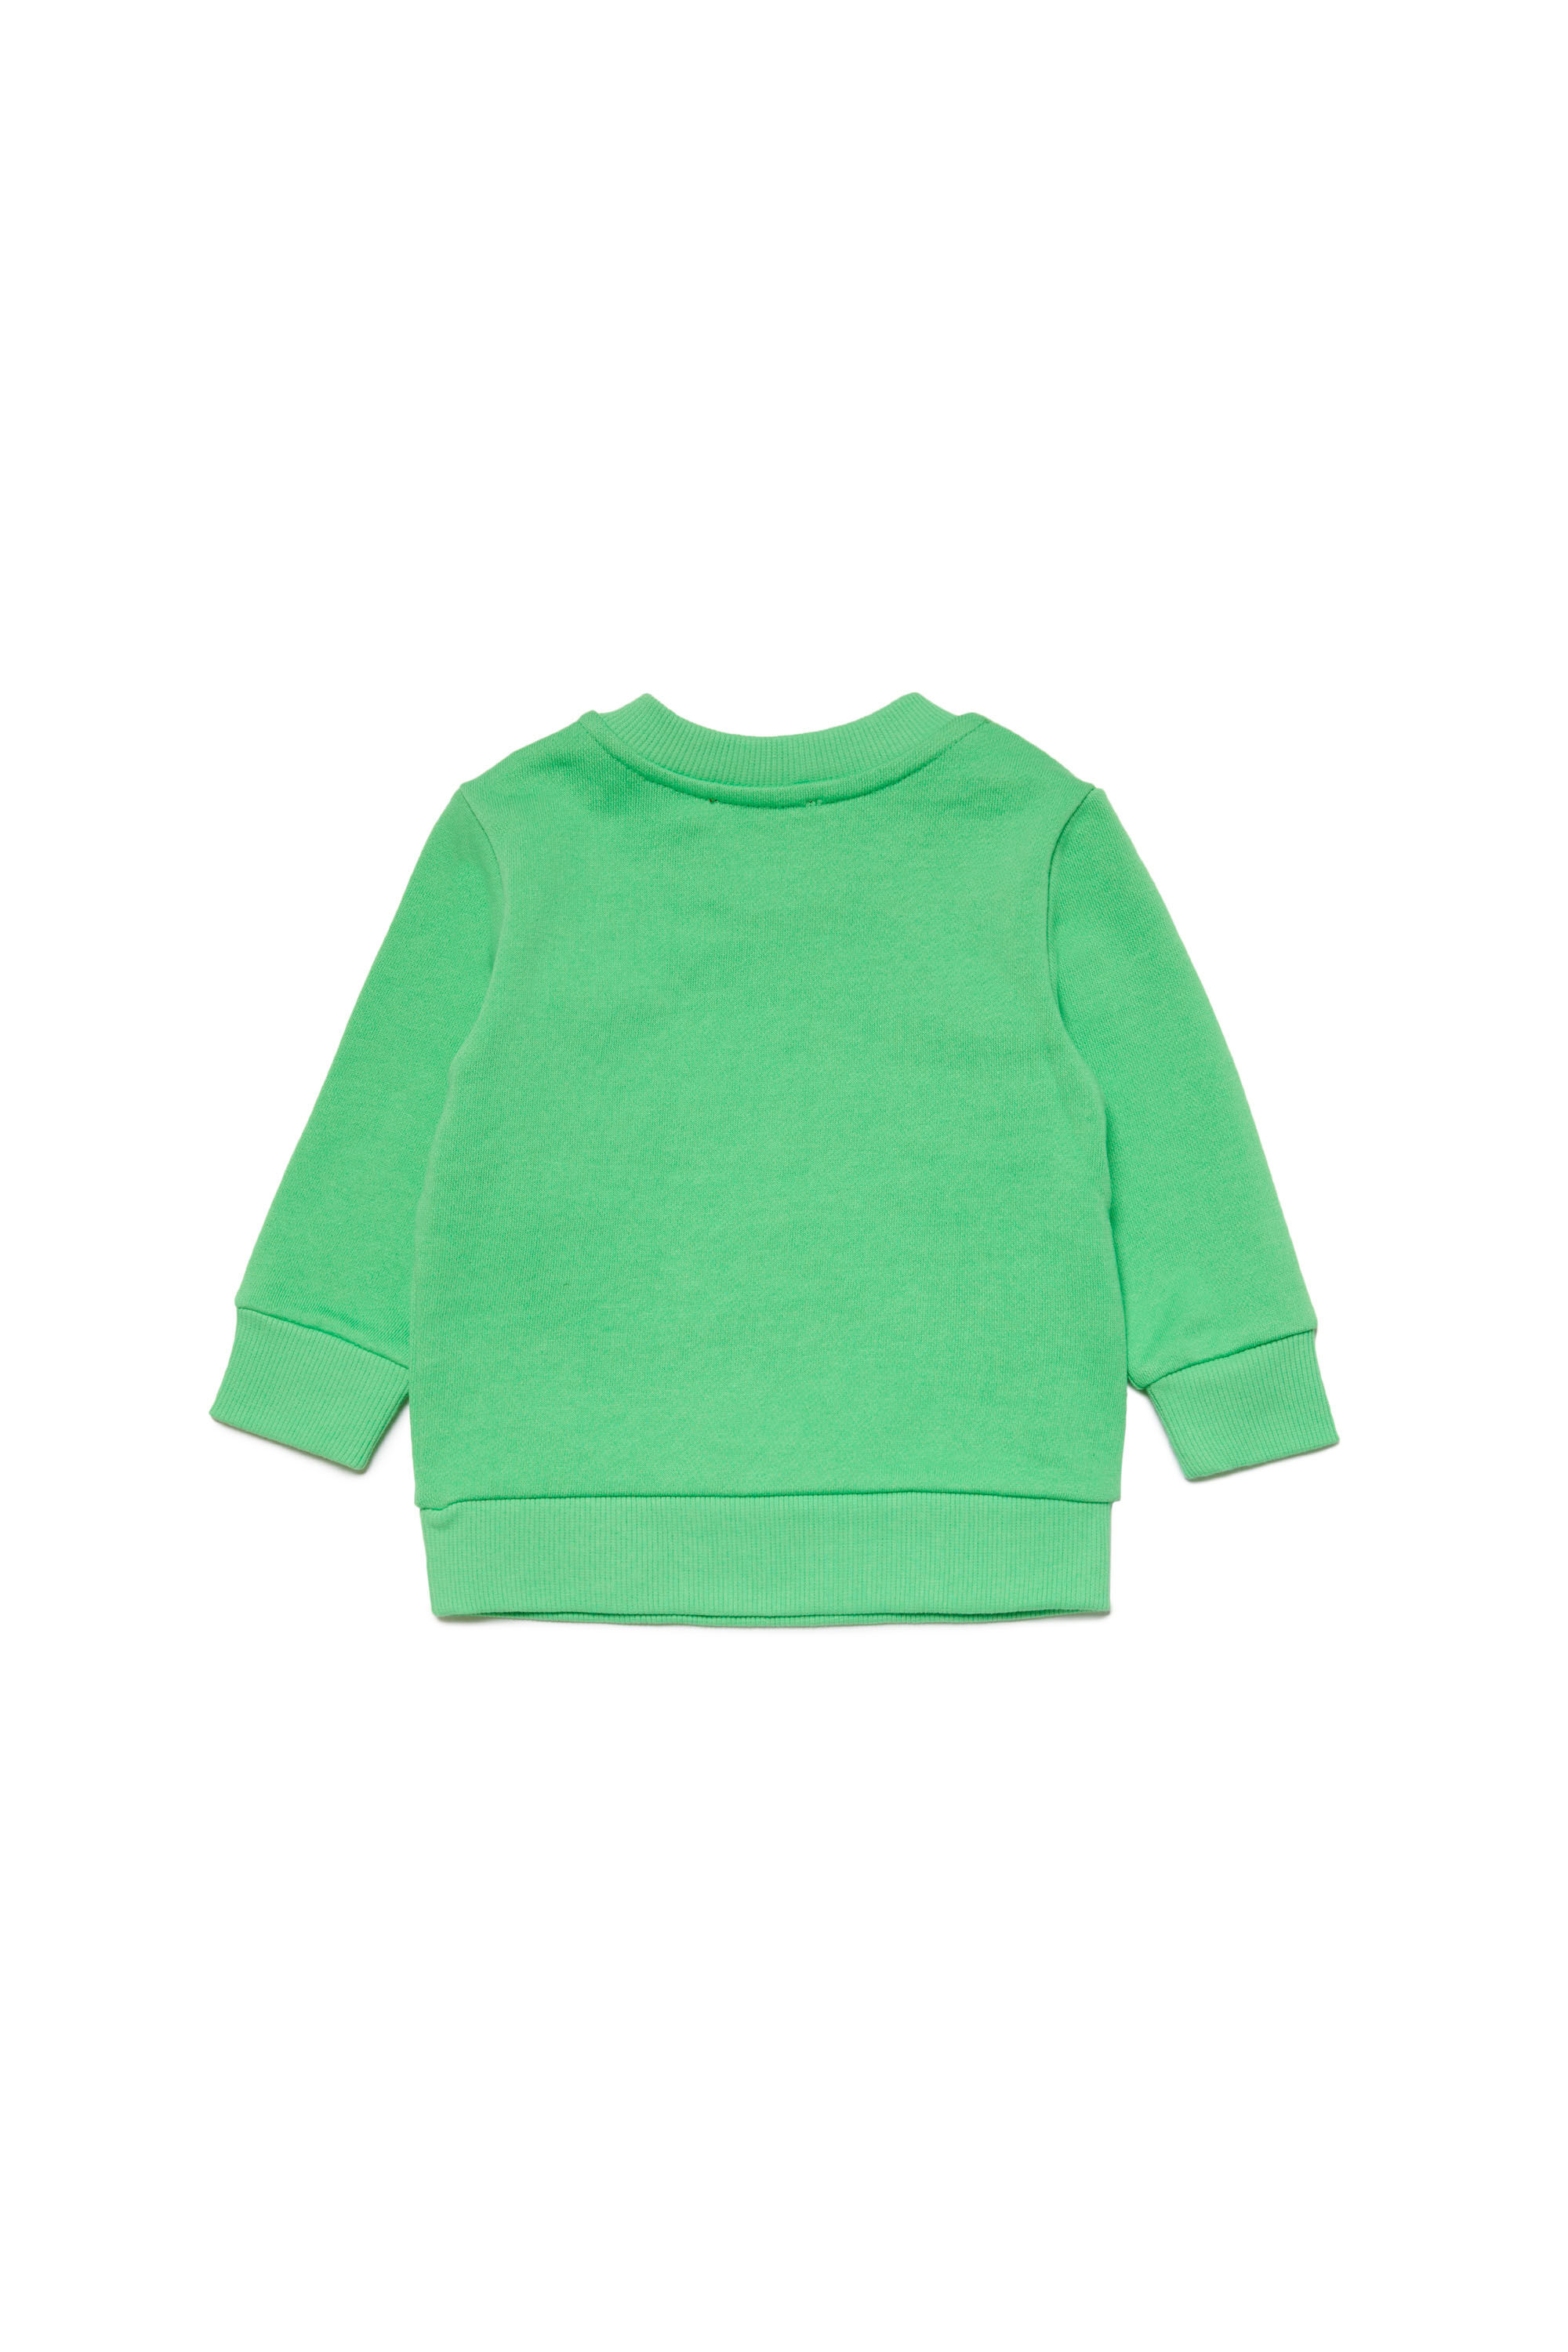 Diesel - SCERB, Unisex Cotton sweatshirt with Oval D in Green - Image 2